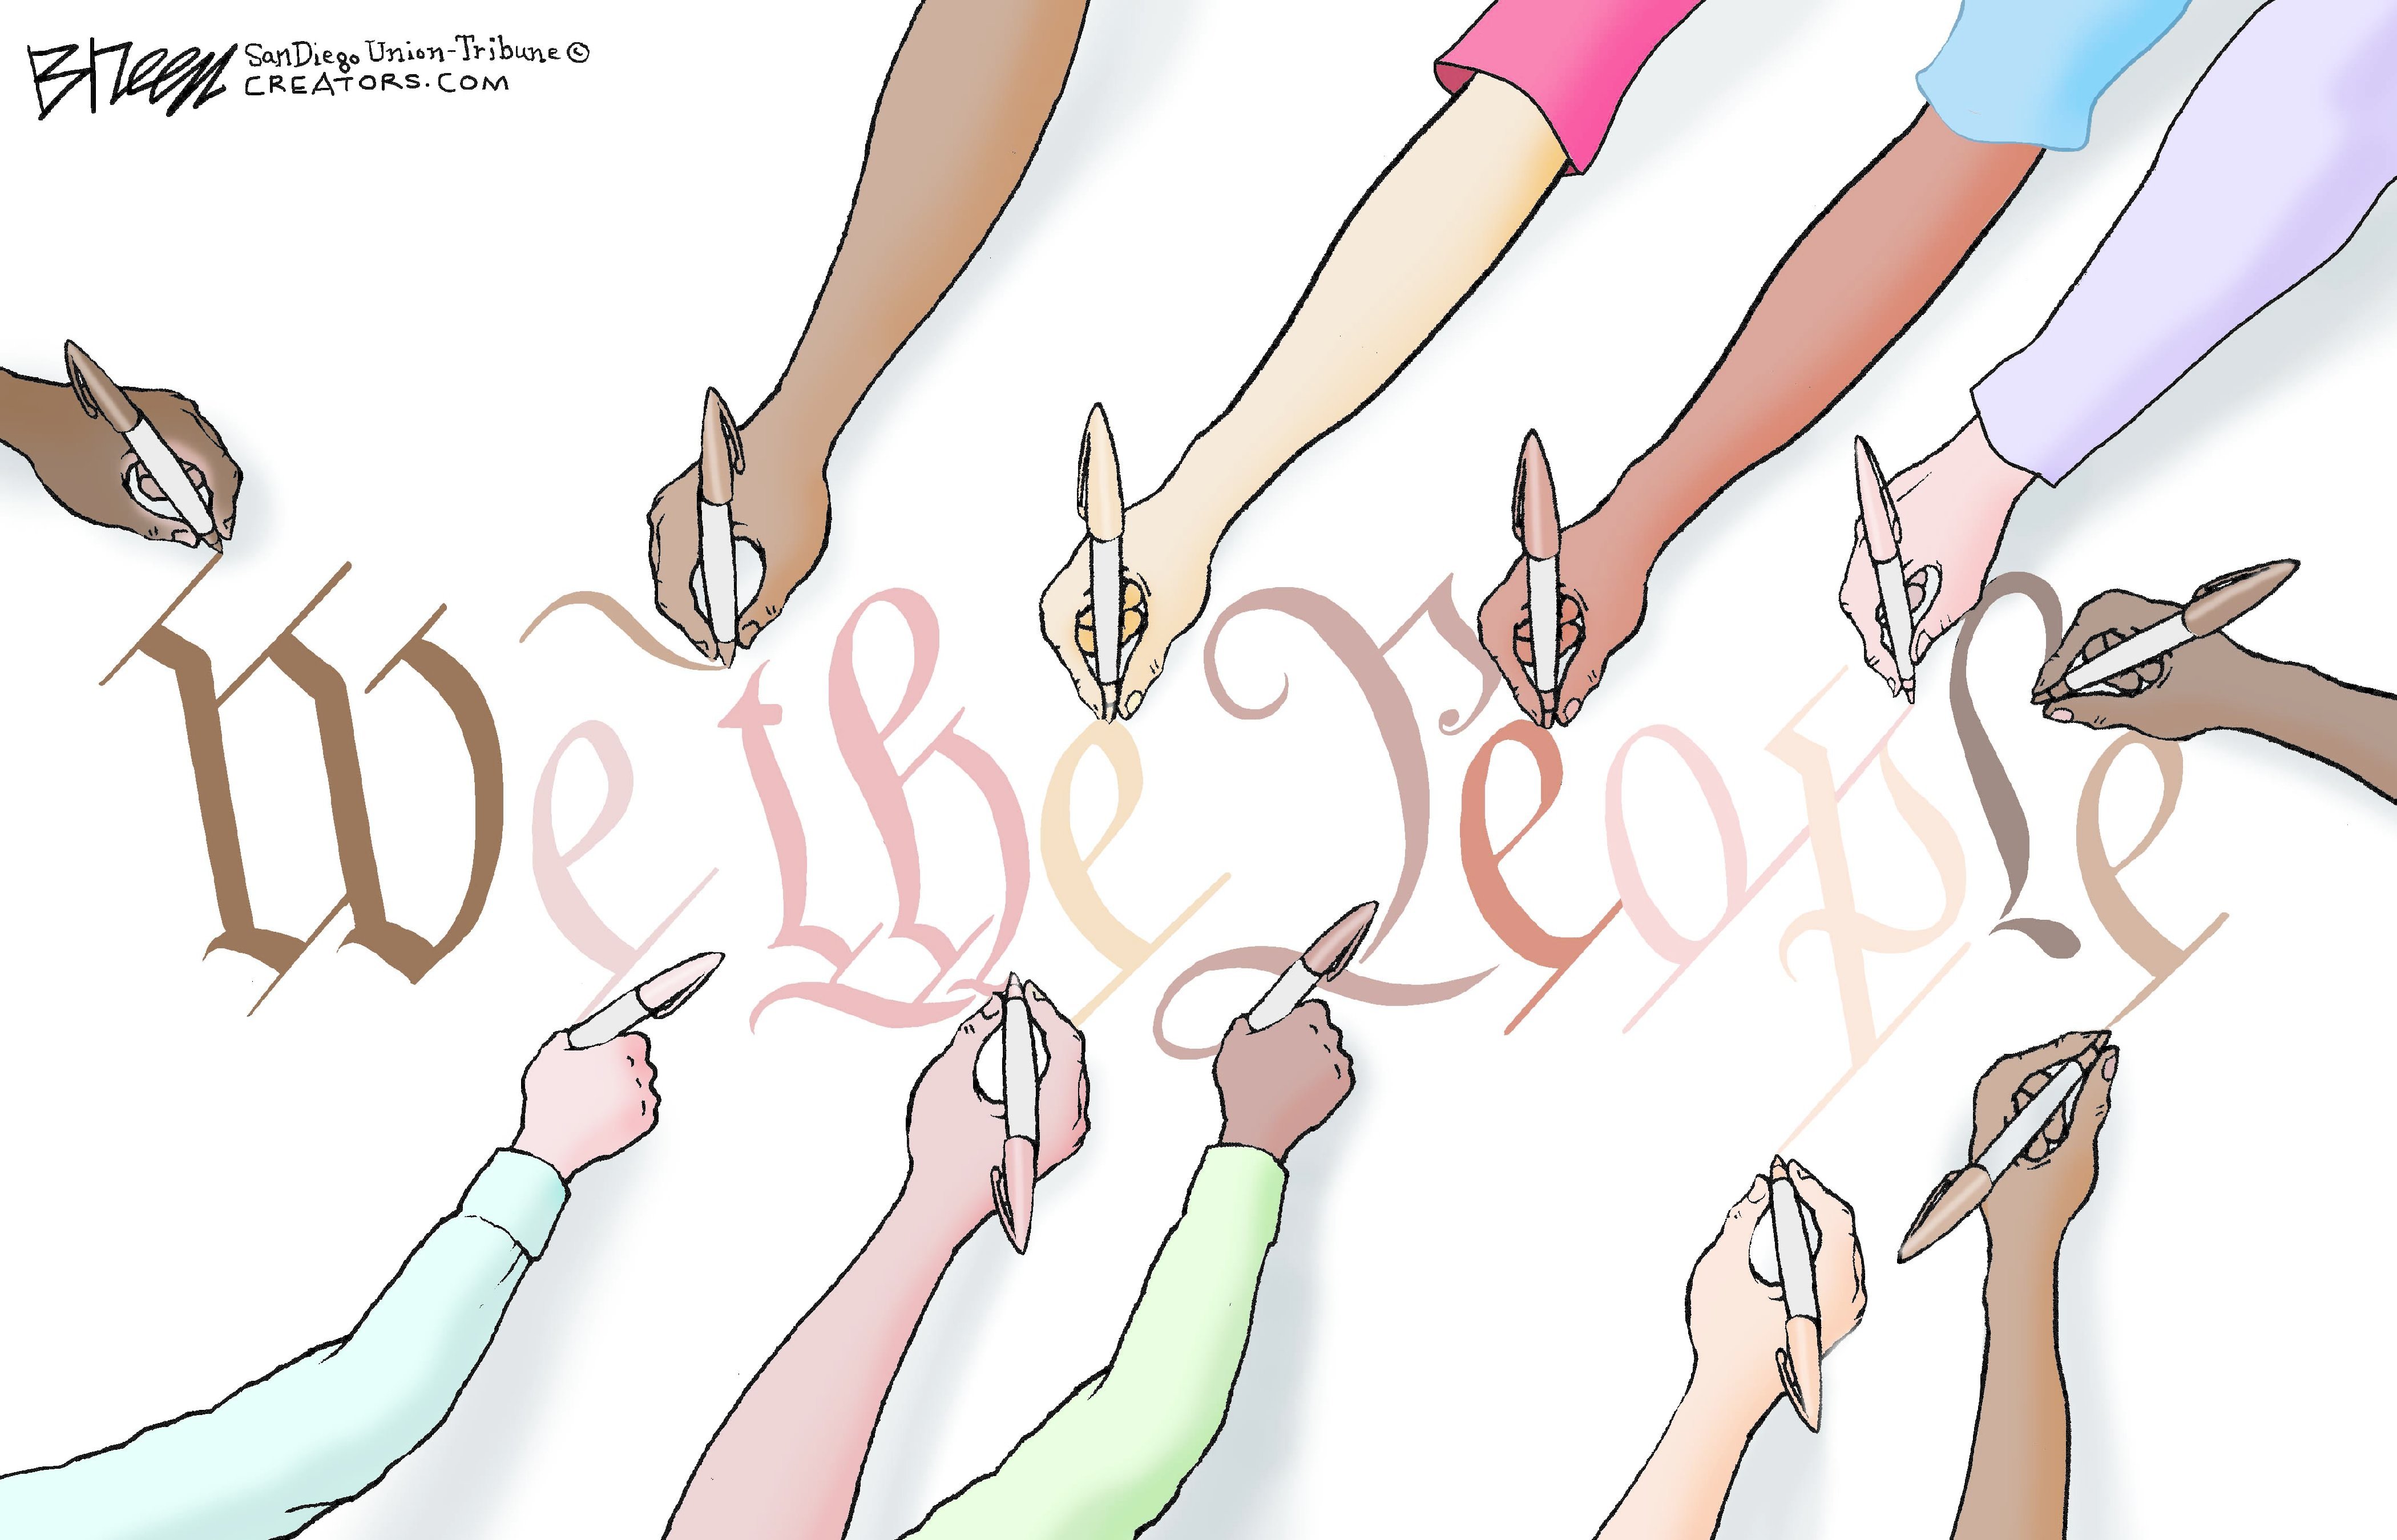 Editorial Cartoon . We the People racial unity